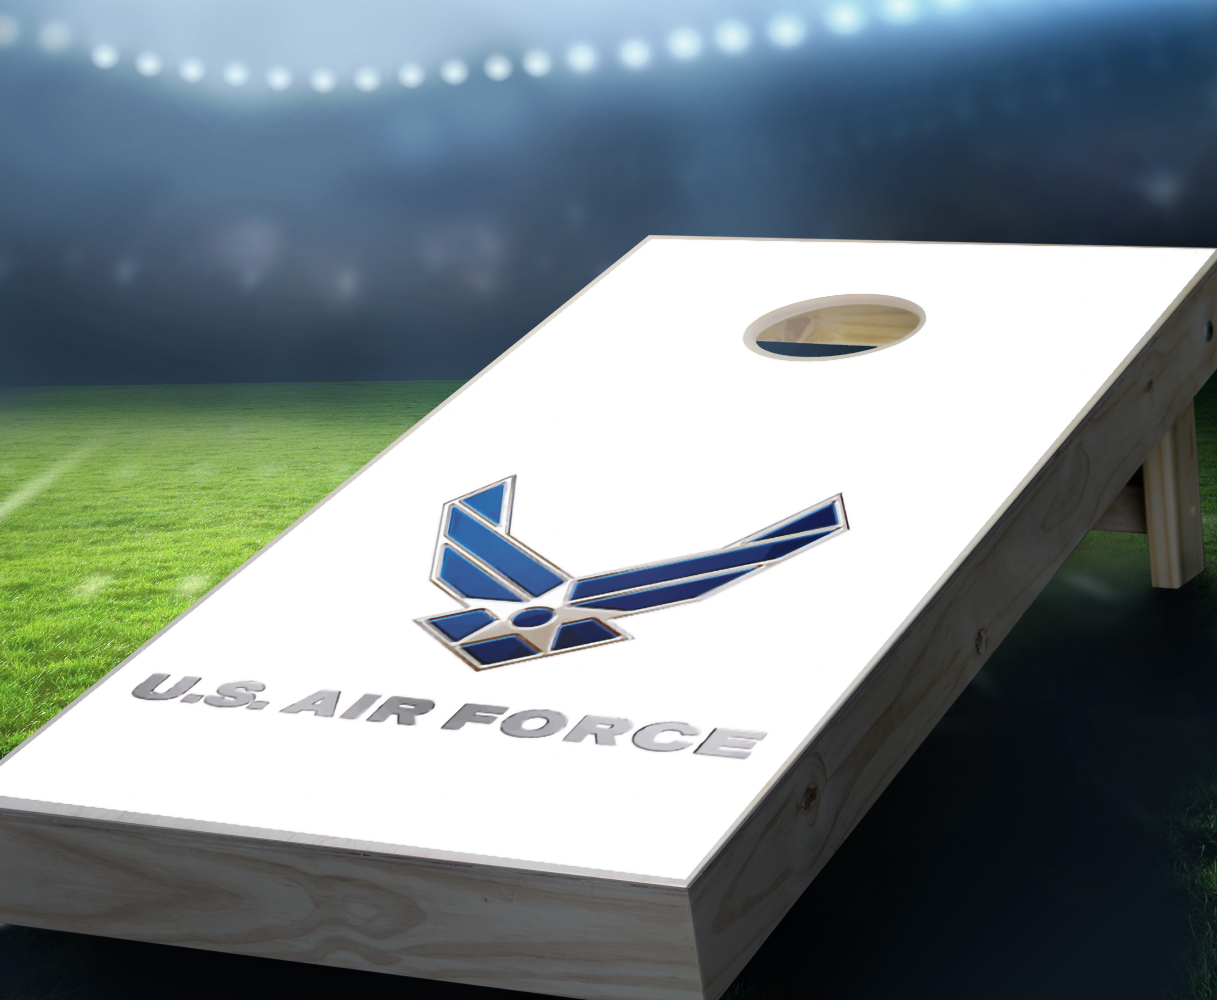 "Air Force Emblem" Cornhole Boards